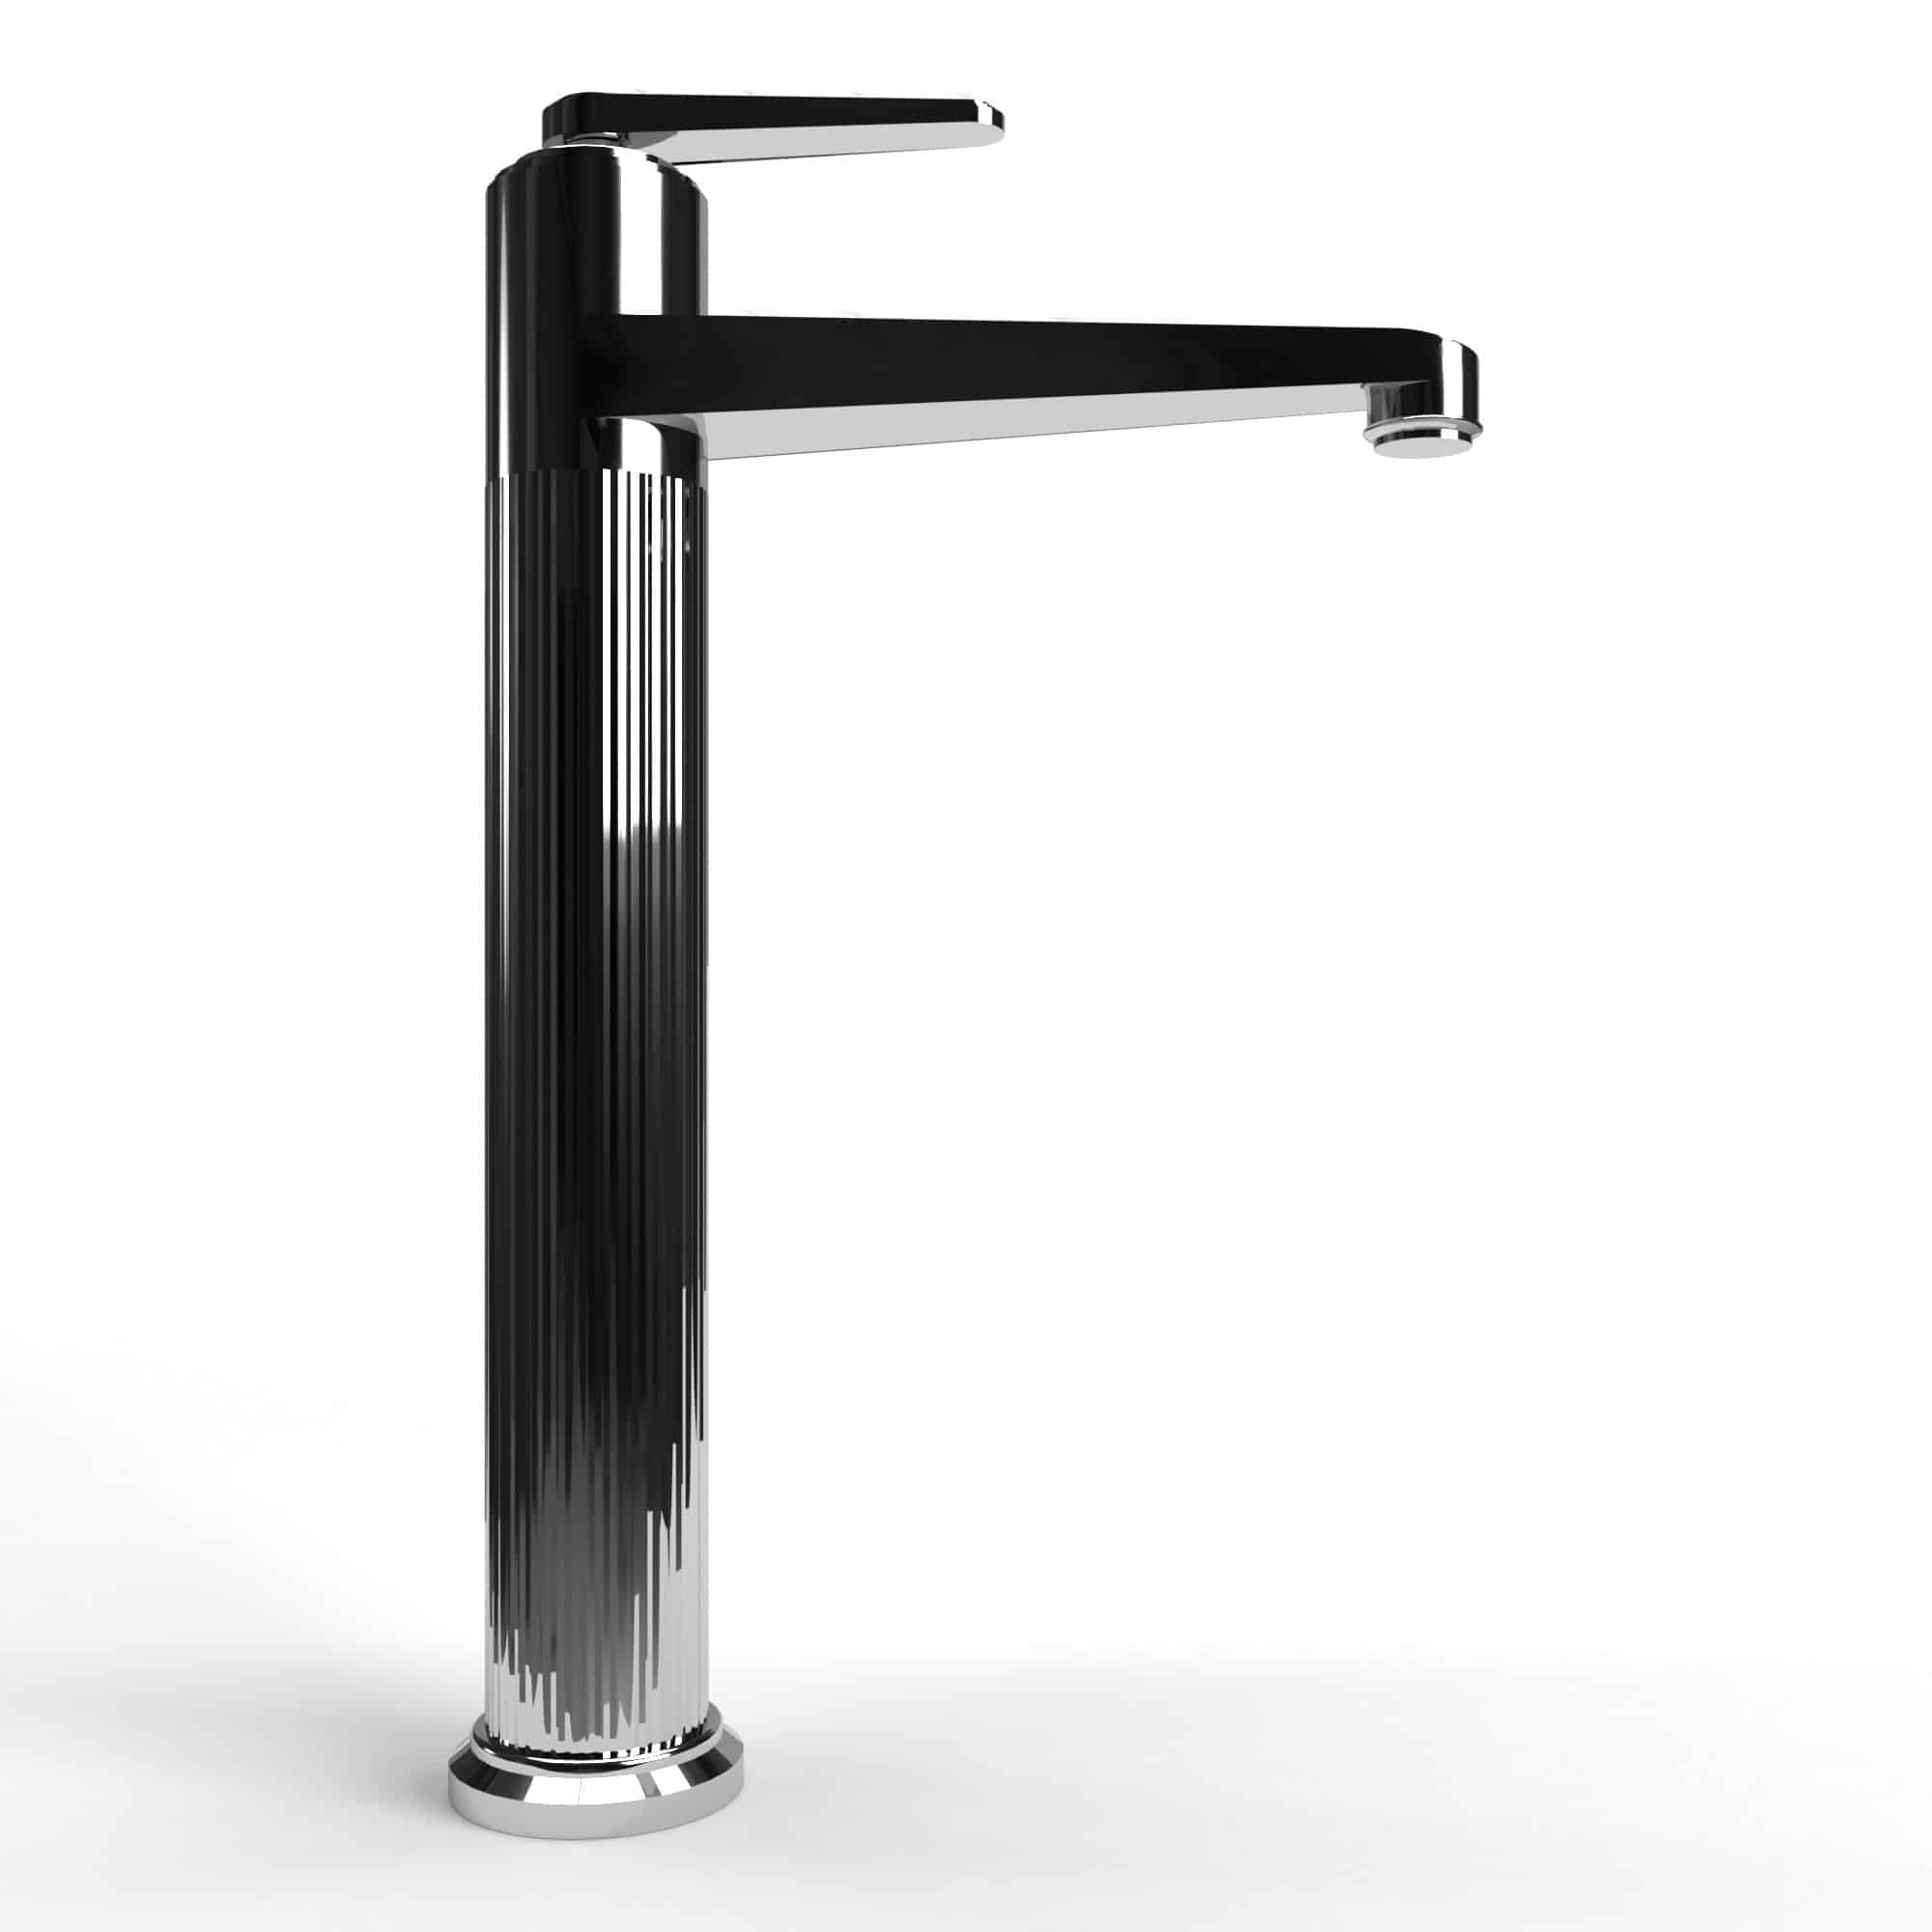 3D Model software rendering of a concept bathroom tap design for Aquaroc